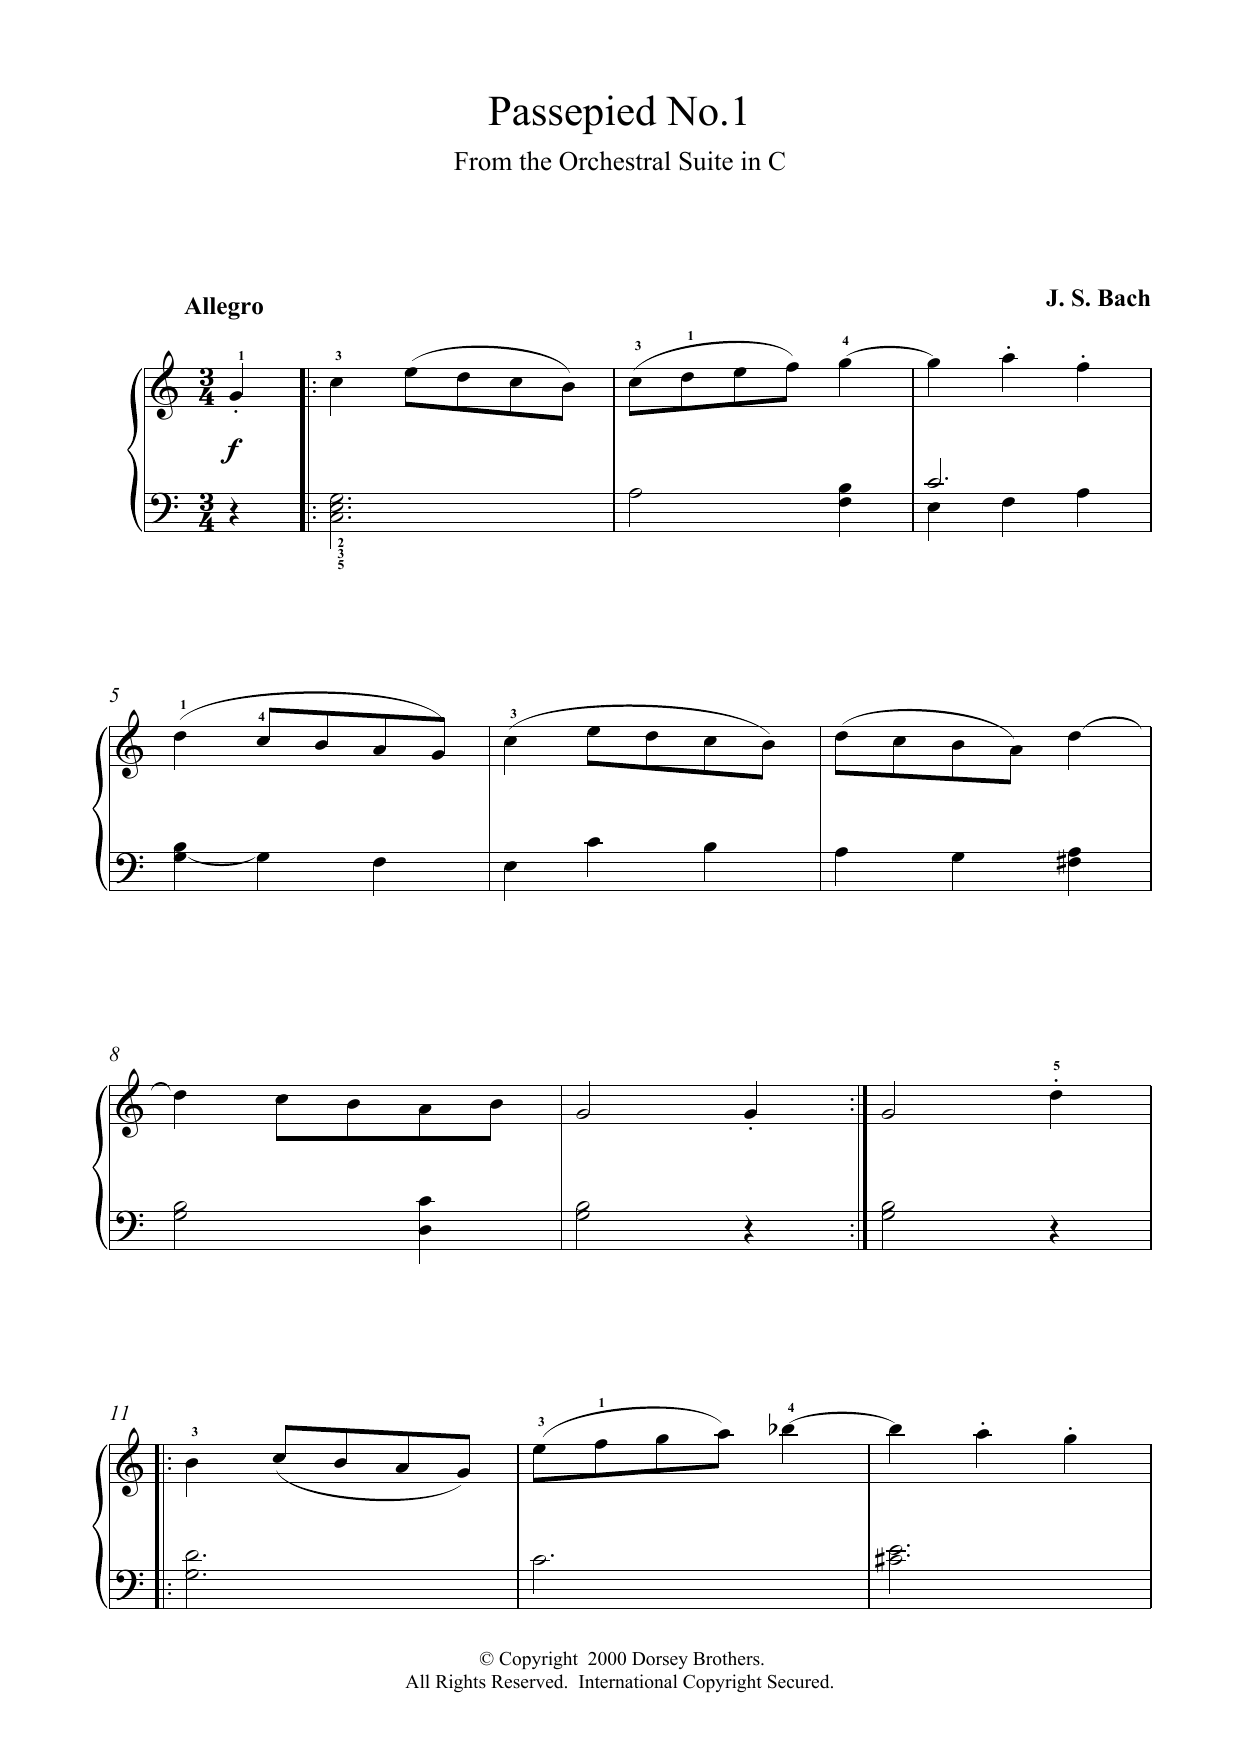 Johann Sebastian Bach Passepied No.1 Sheet Music Notes & Chords for Piano - Download or Print PDF